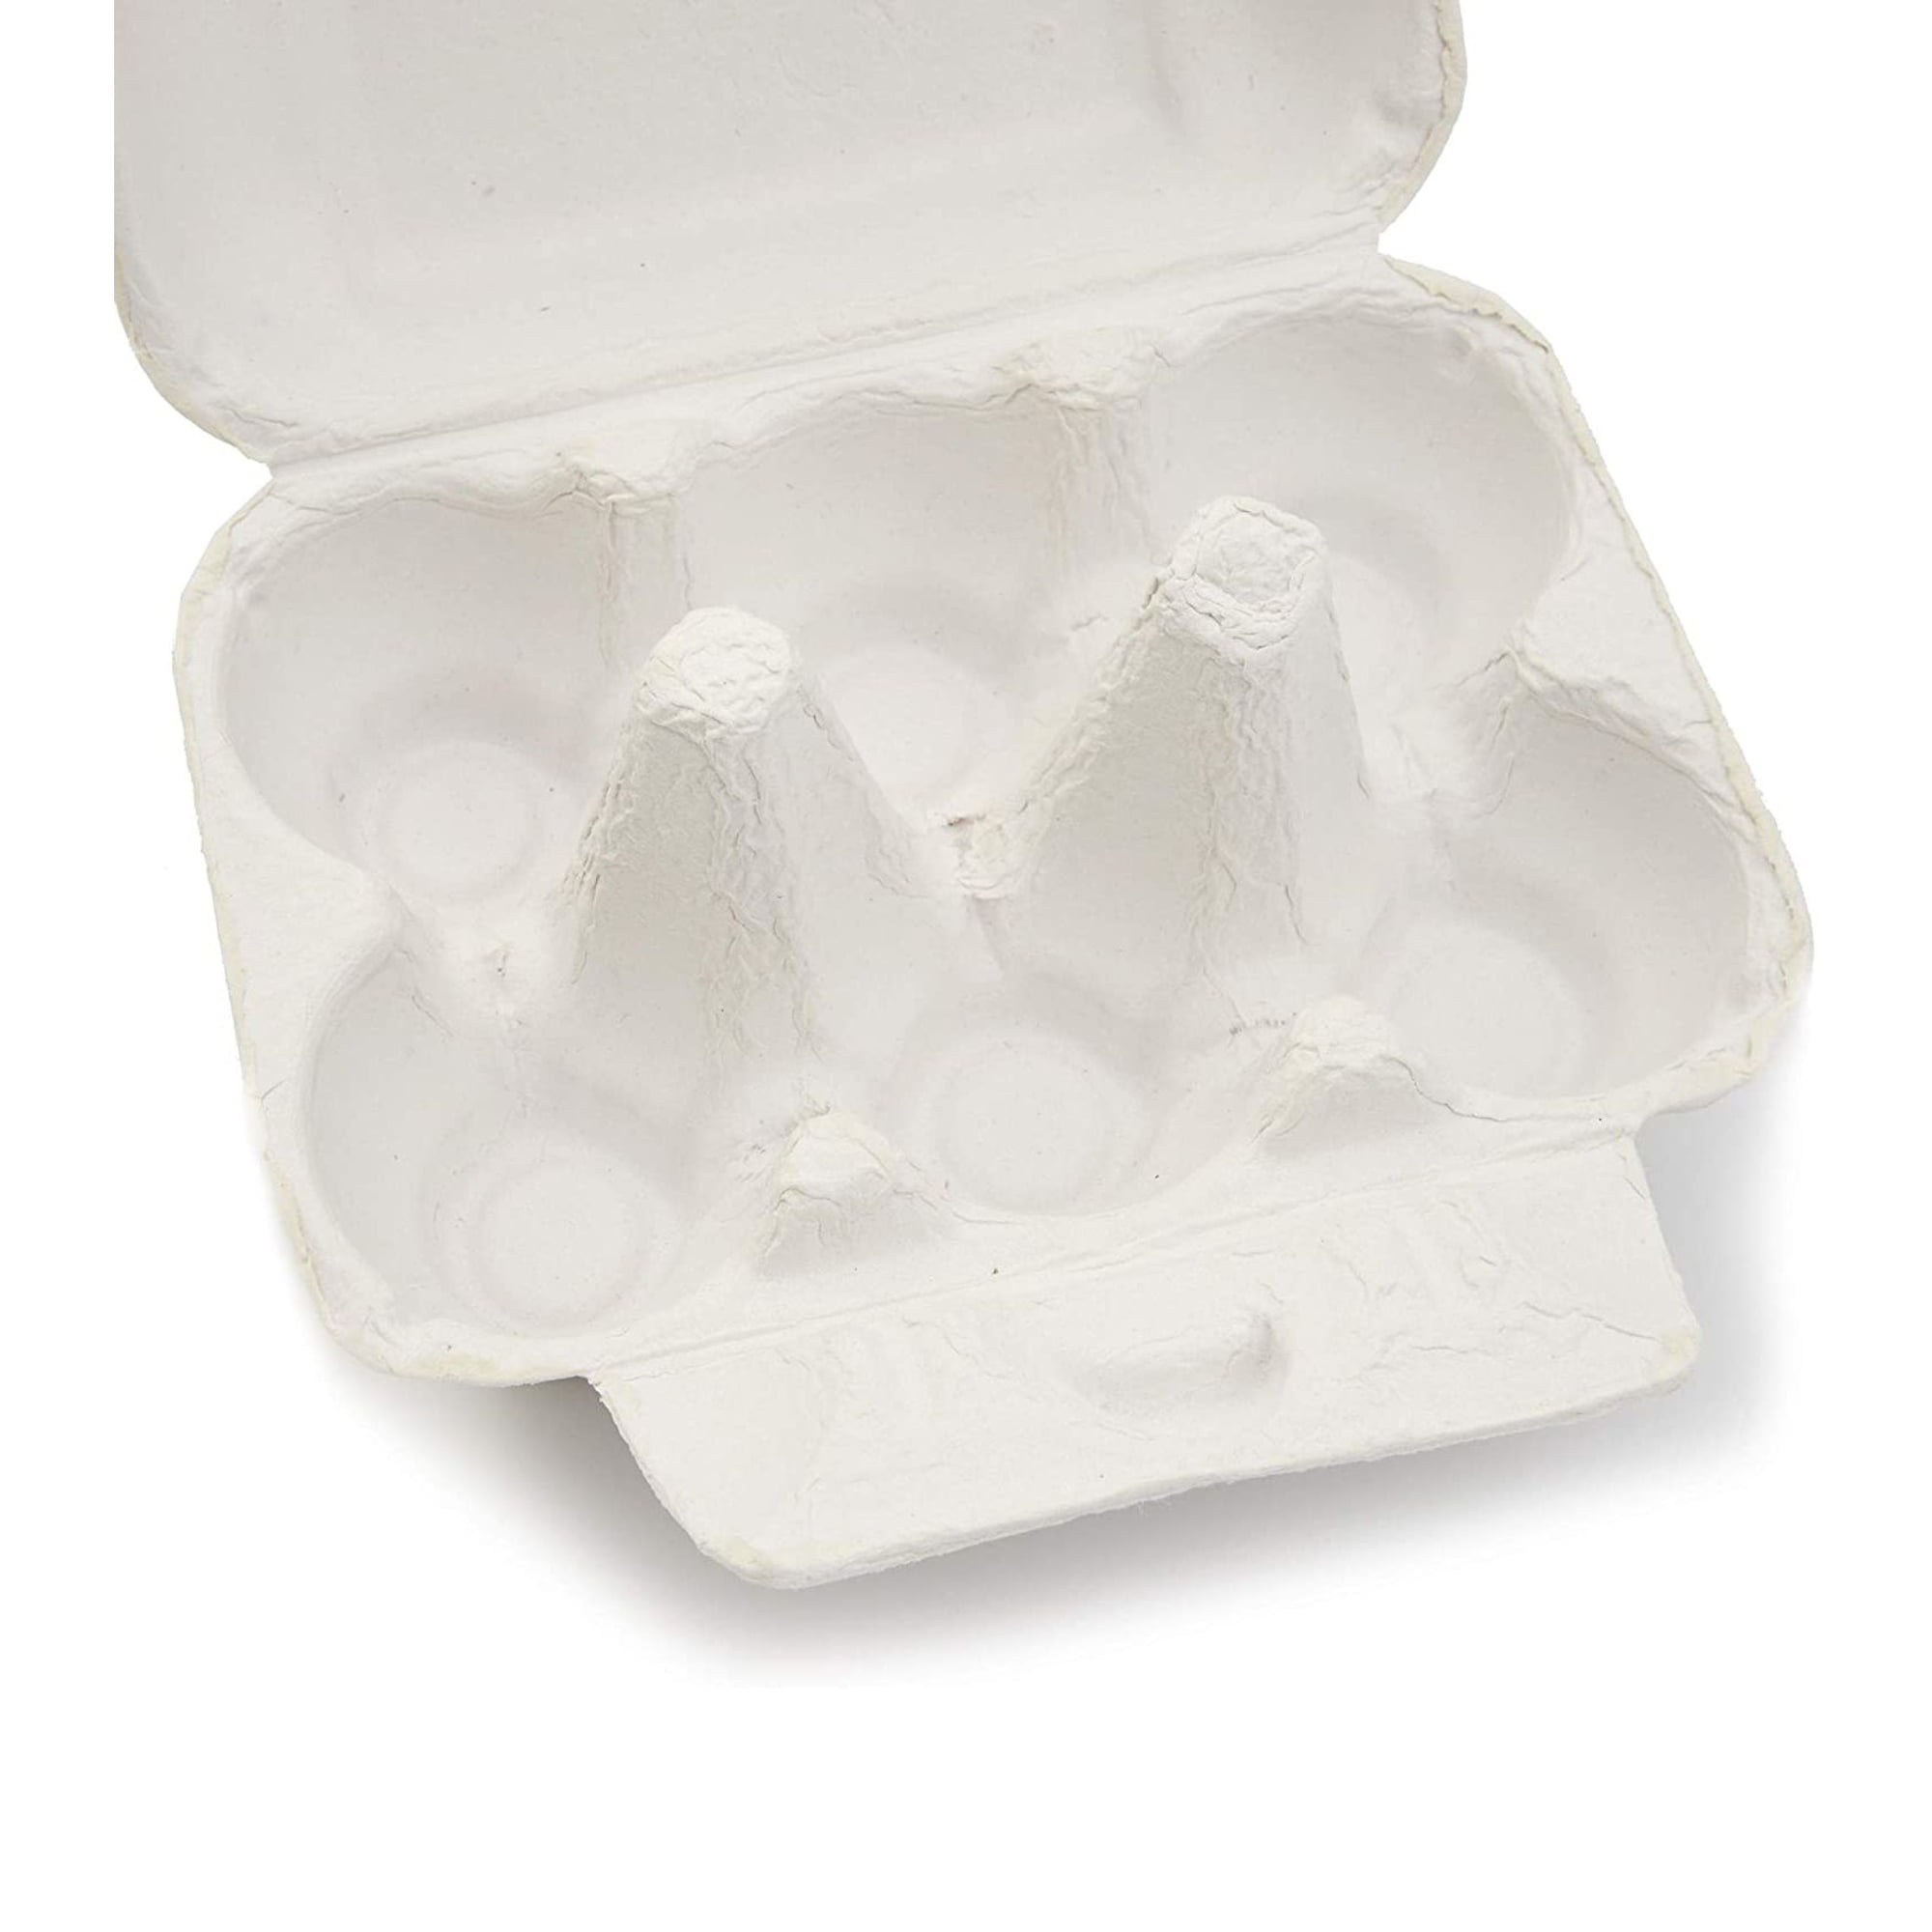 AYAYGD 40 Pack Plastic Egg Cartons Cheap Bulk,1 Dozen Clear Empty